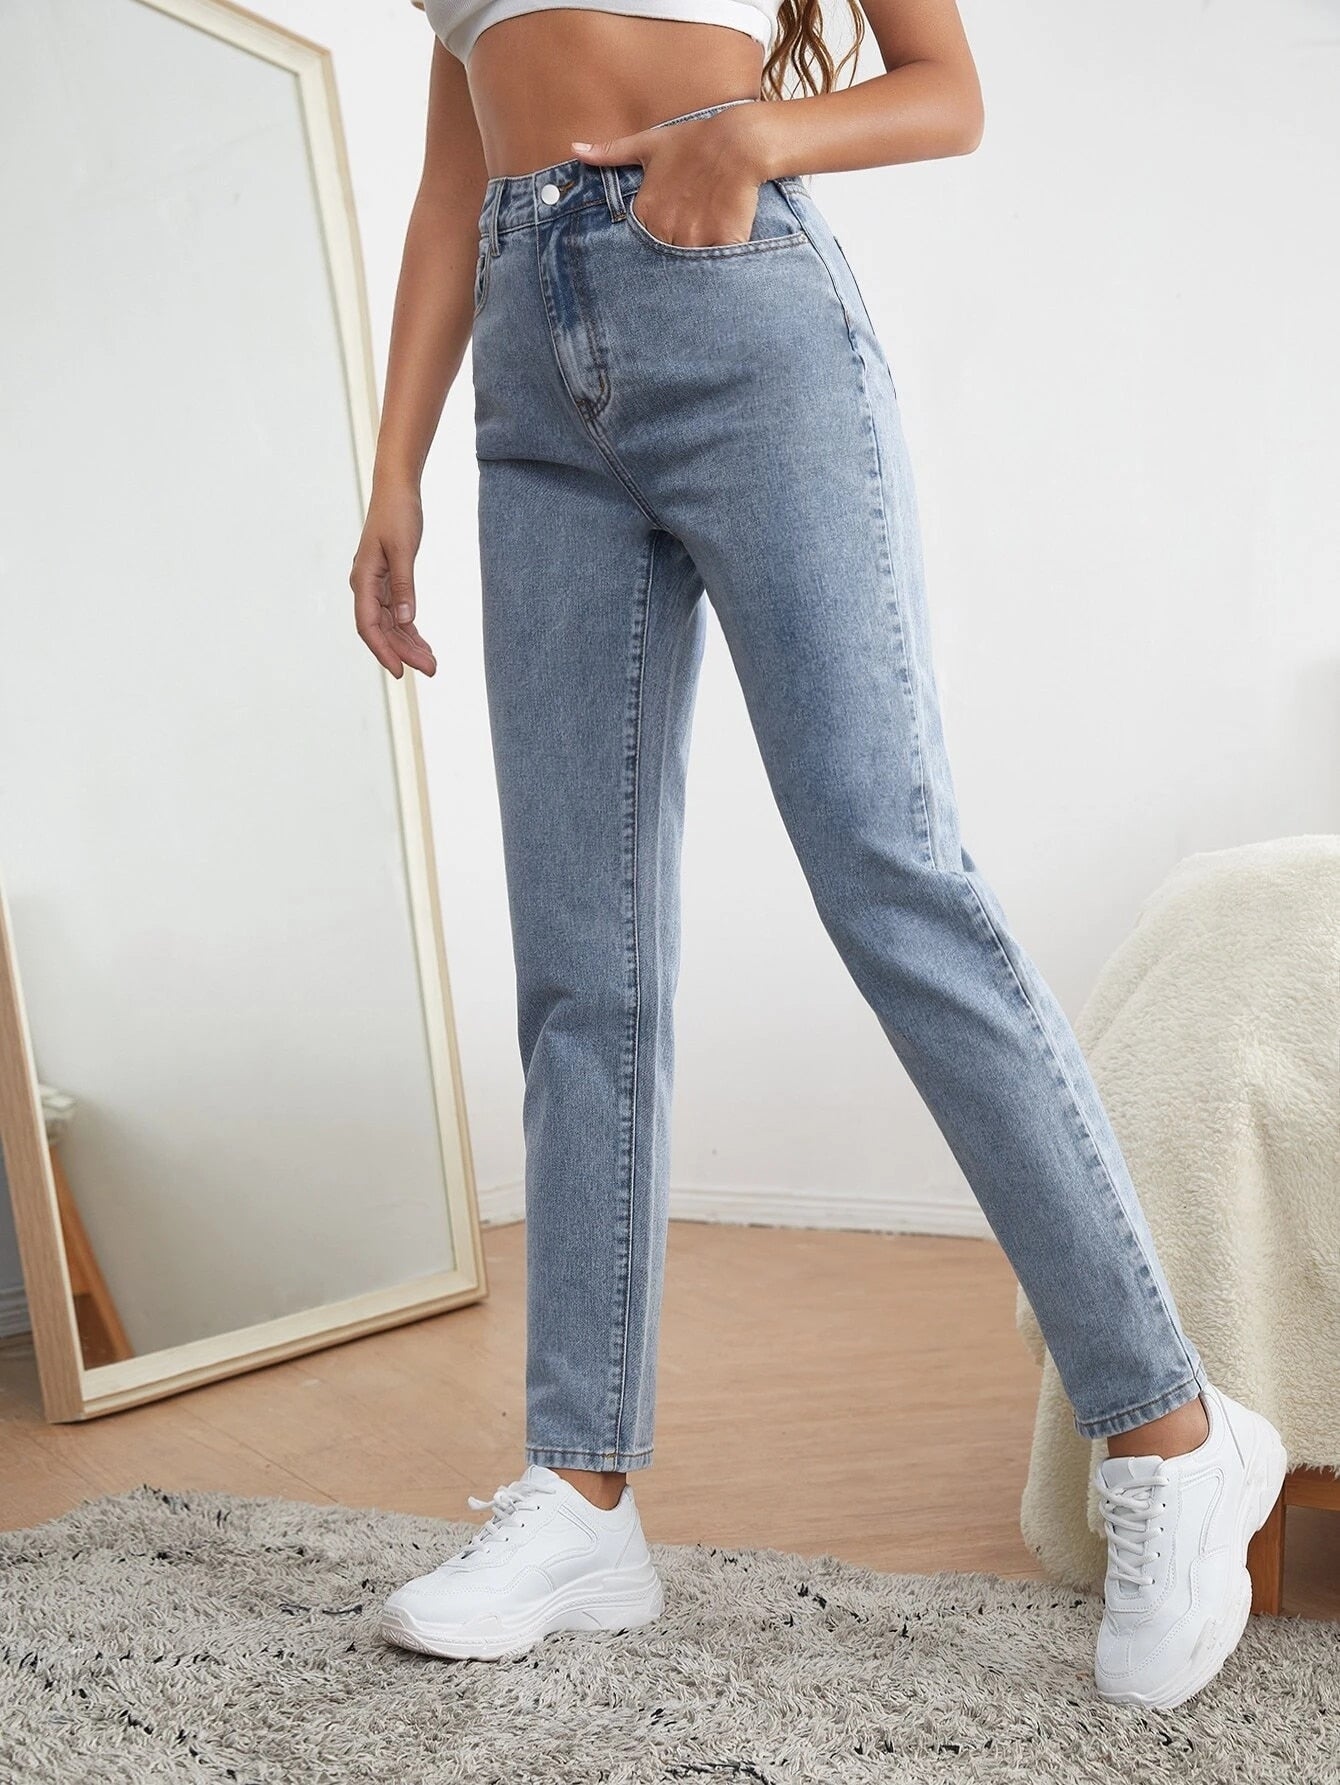 Plus Size Jeans High Waist Jeans